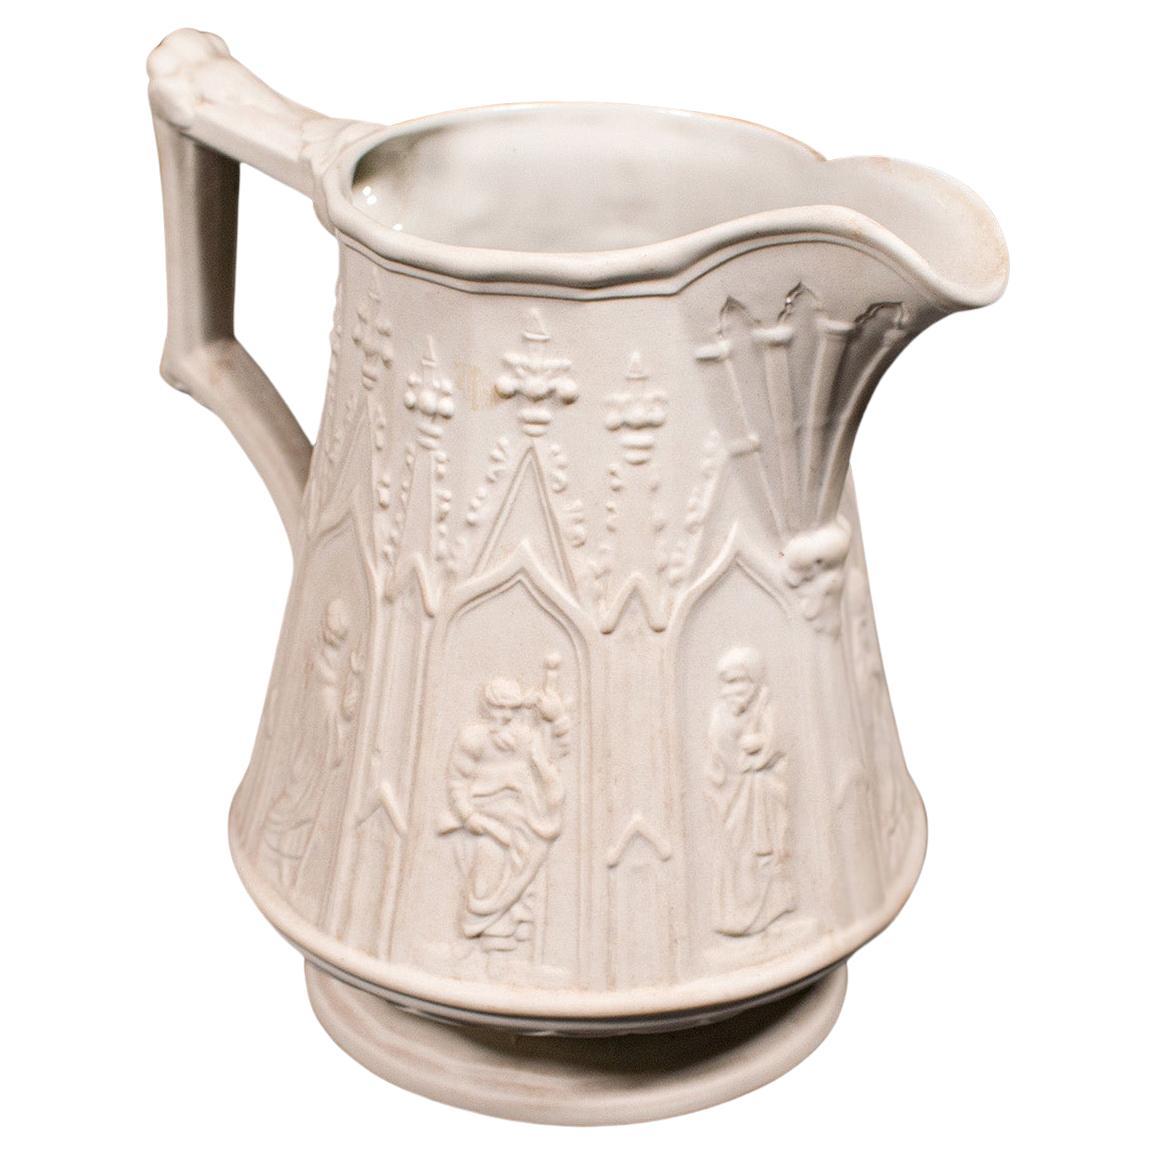 Gegossener Vintage-Töpferwarenkrug, englisch, Parian Ware Keramik, Serviercreme, dekorativ